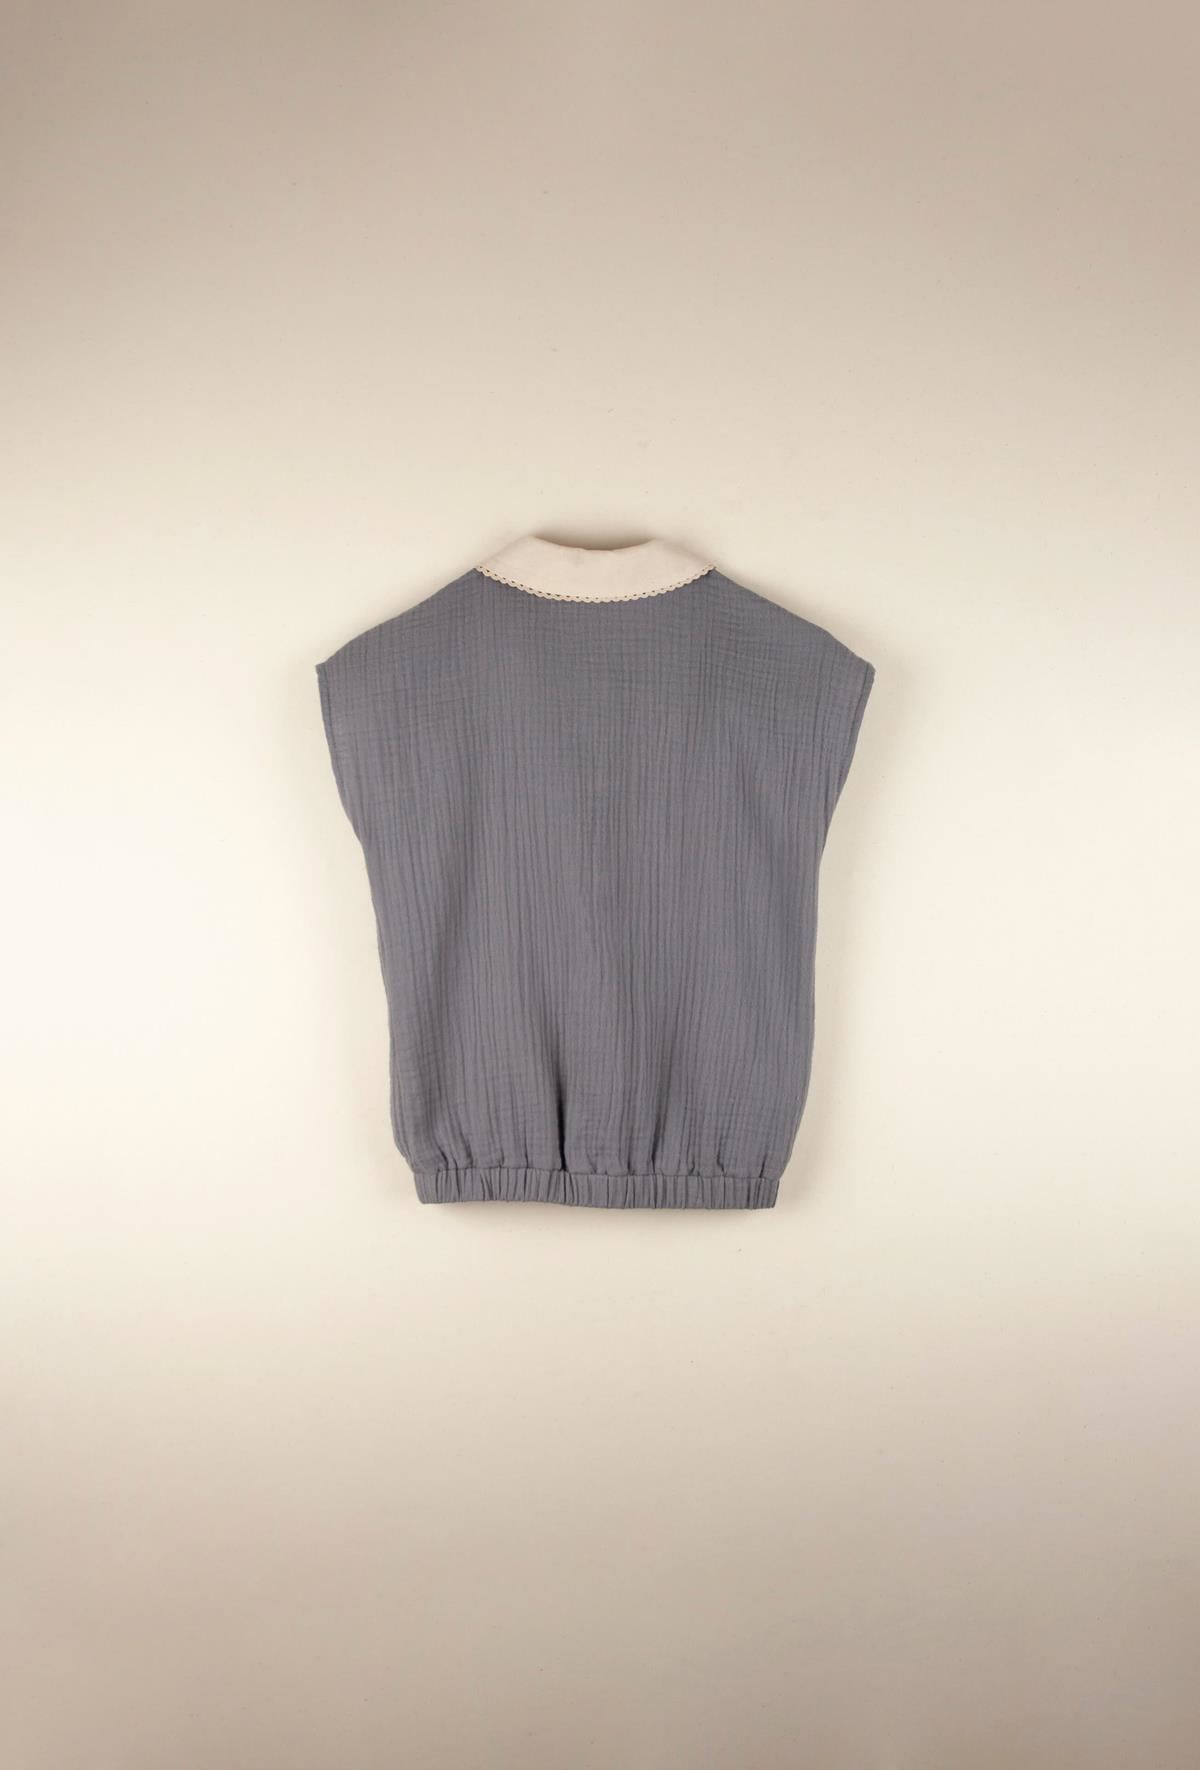 Mod.17.3 Greyish-blue organic blouse with embroidered collar | SS22 Mod.17.3 Greyish-blue organic blouse with embroidered collar | 1